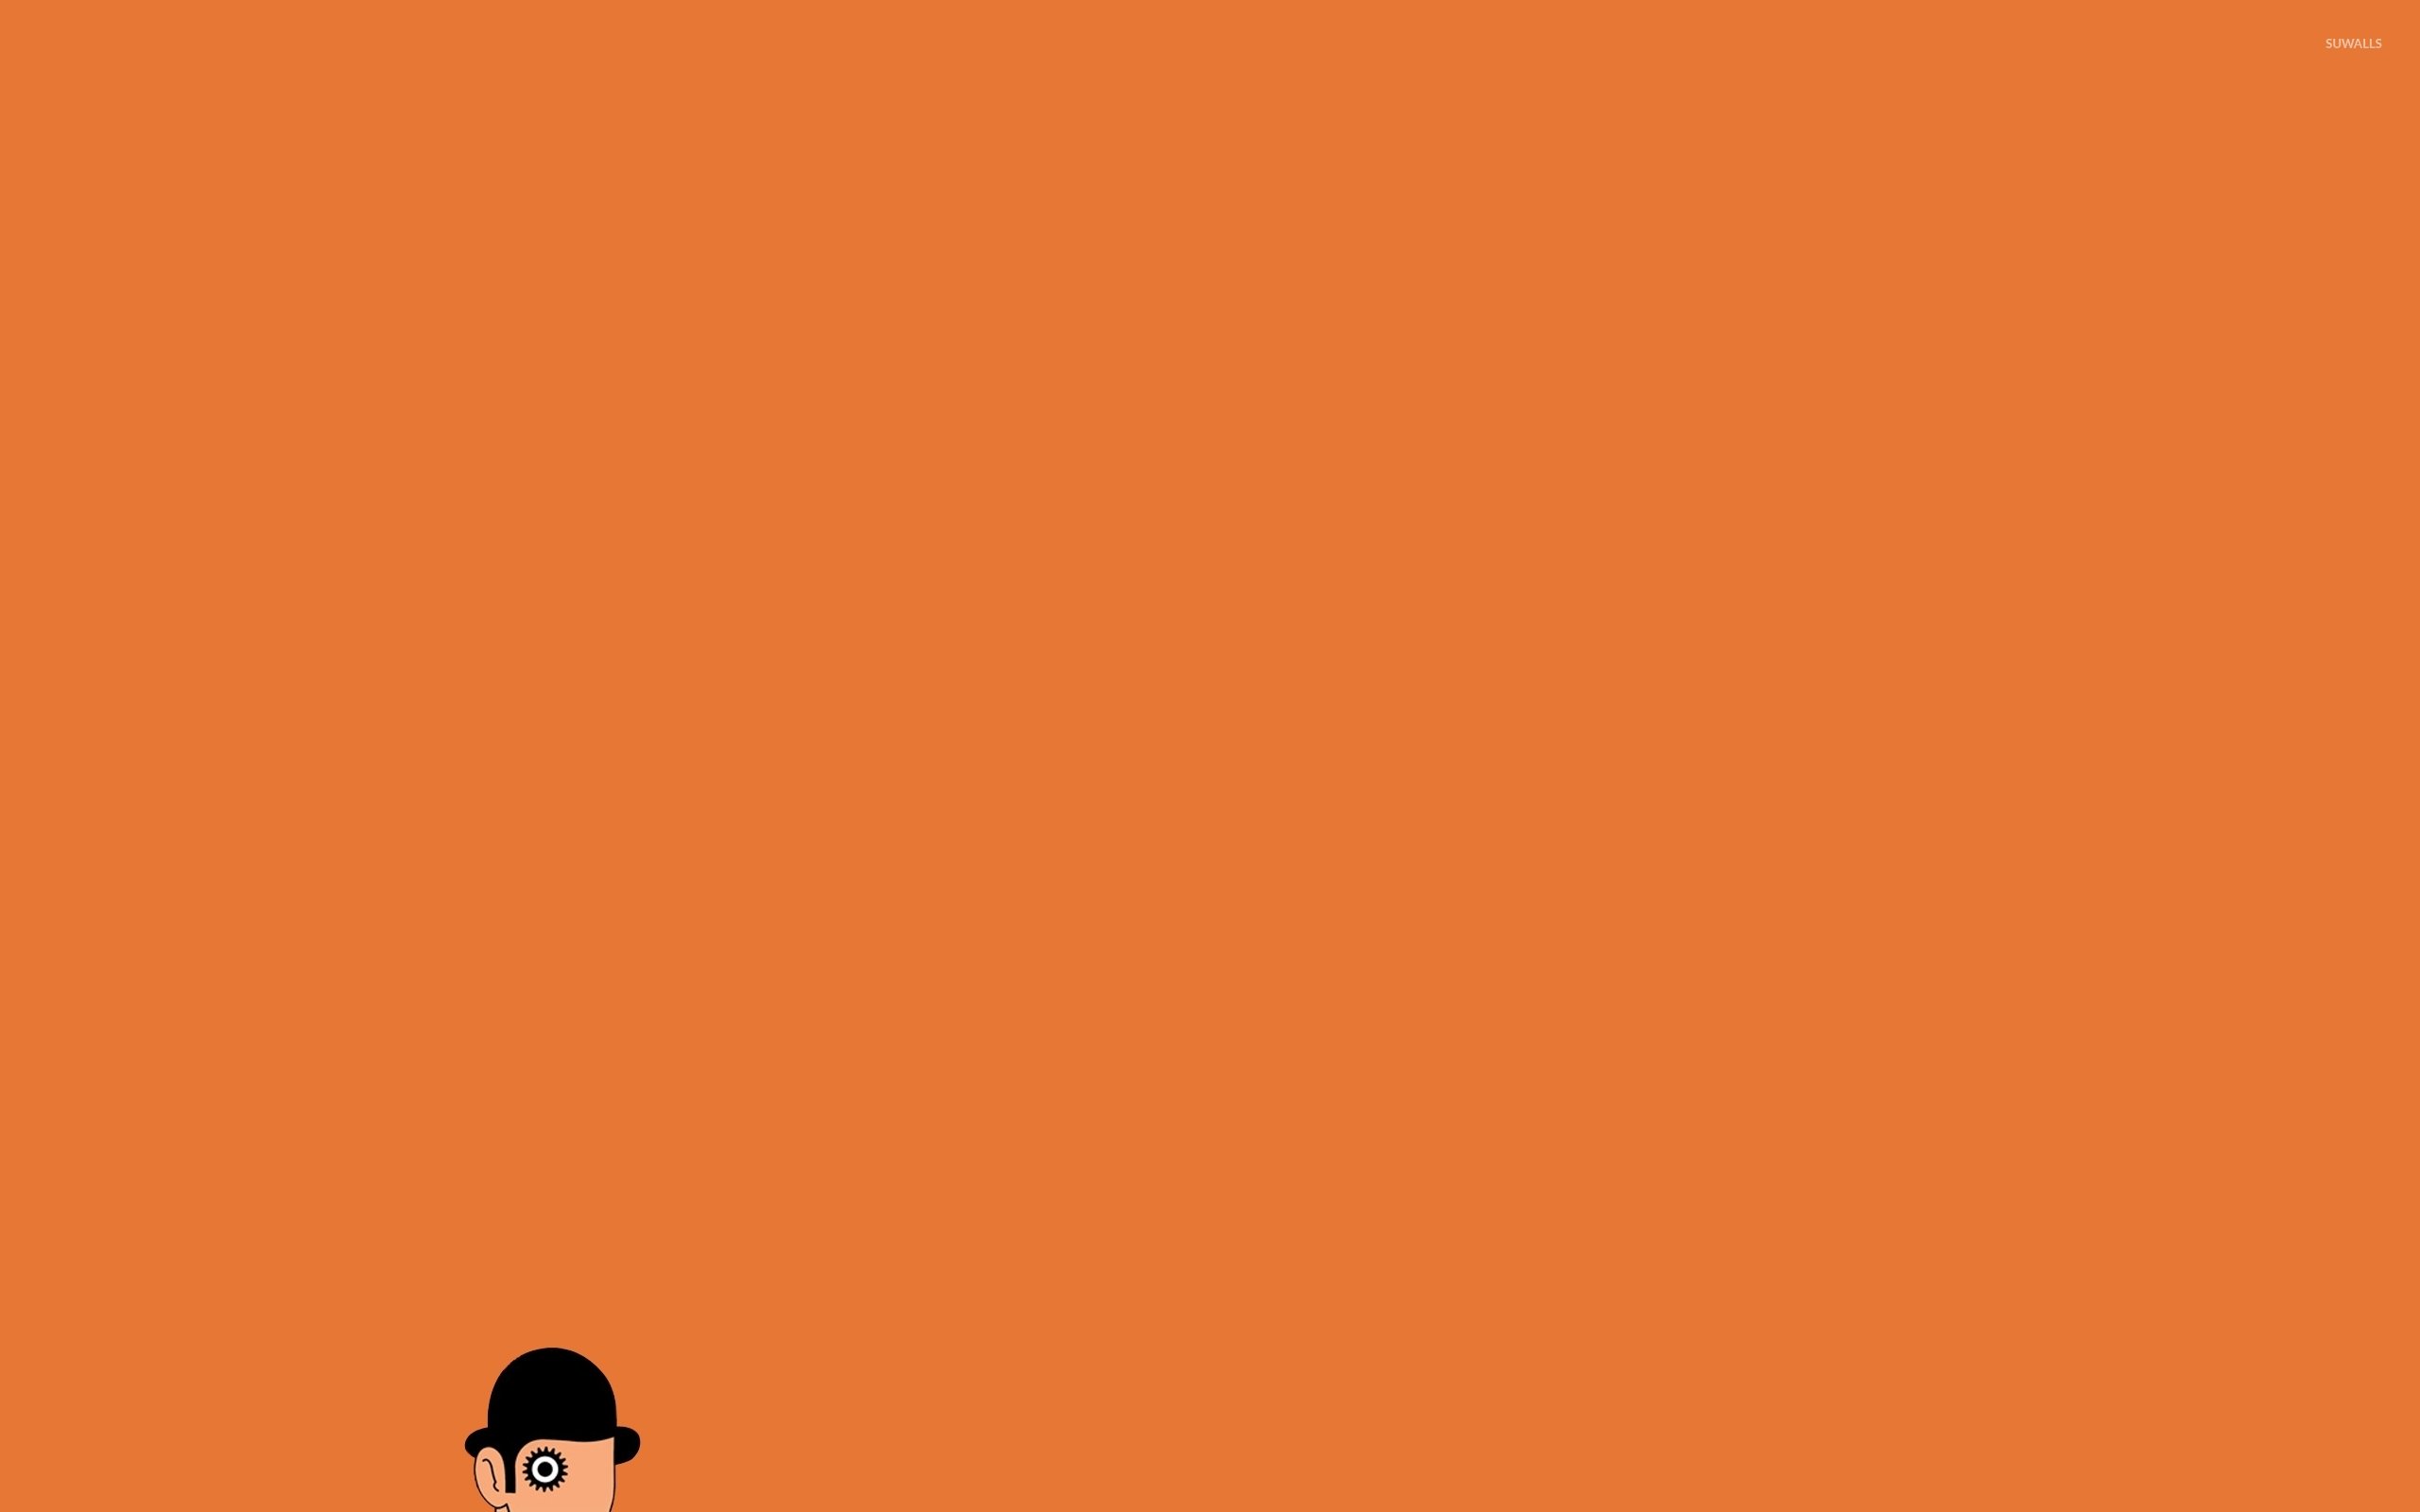 A Clockwork Orange wallpaper   Minimalistic wallpapers   43893